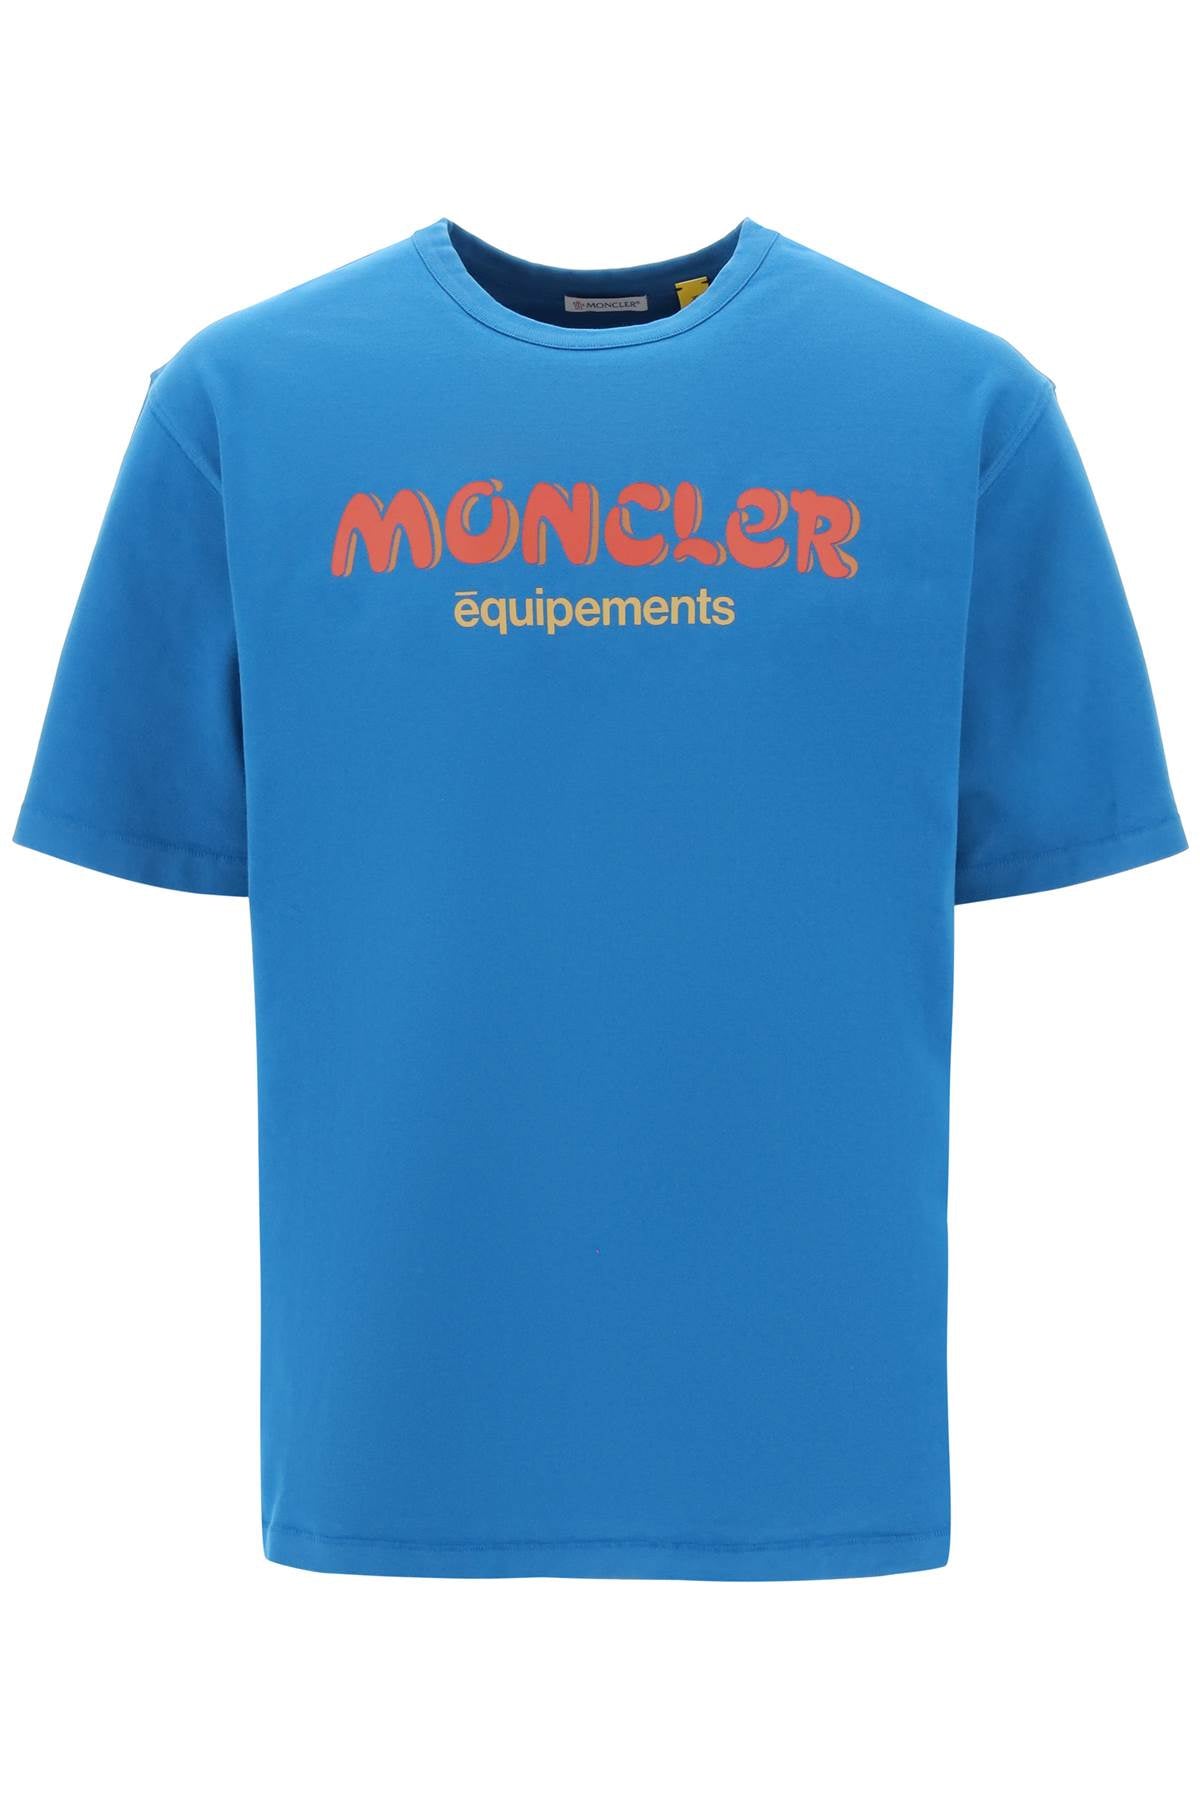 Moncler X SALEHE BEMBURY Moncler x salehe bembury logo t-shirt